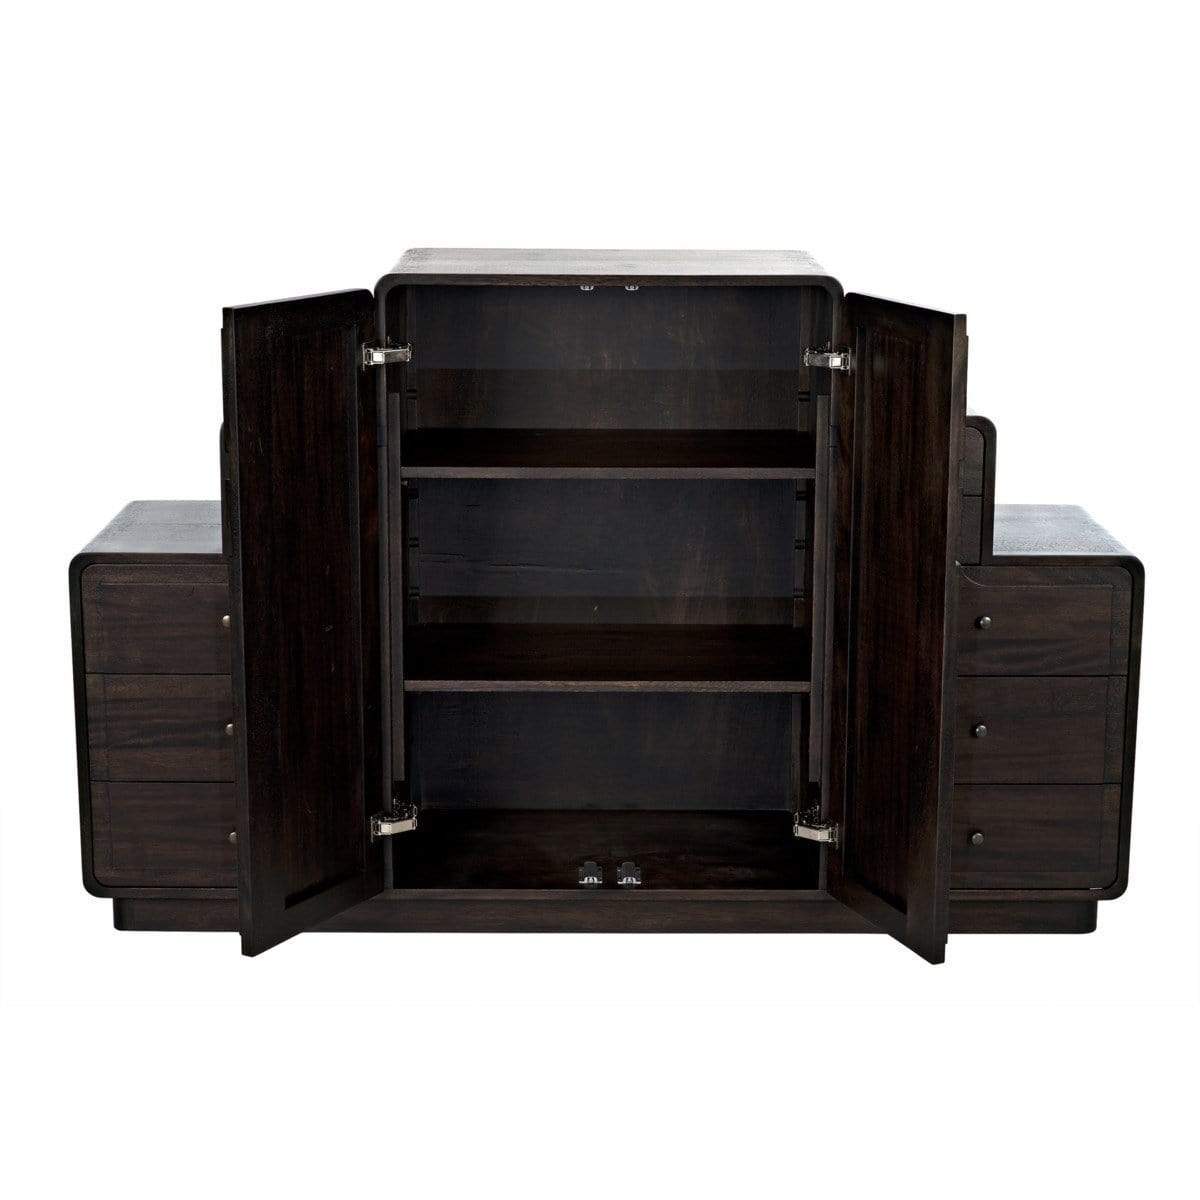 Noir Nova Sideboard Furniture noir-GCON357EB 00842449128590